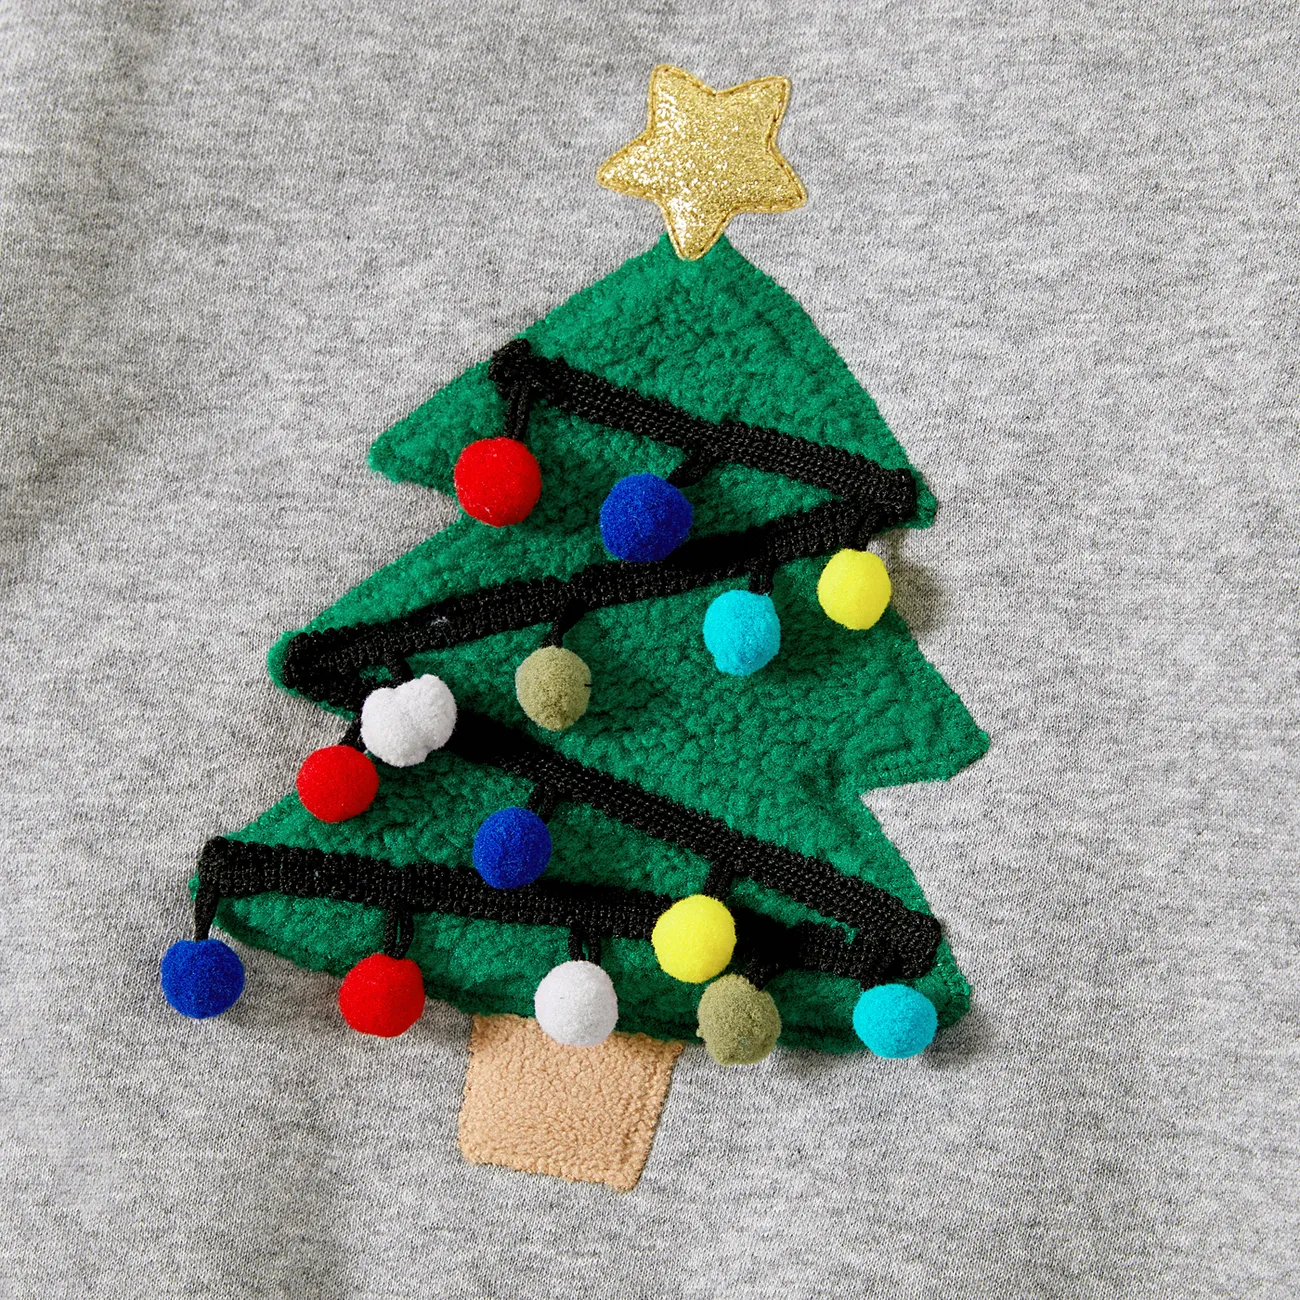 Christmas Family Matching Casual Tree Embroidered Long Sleeve Fleece Tops WARMGREY big image 1